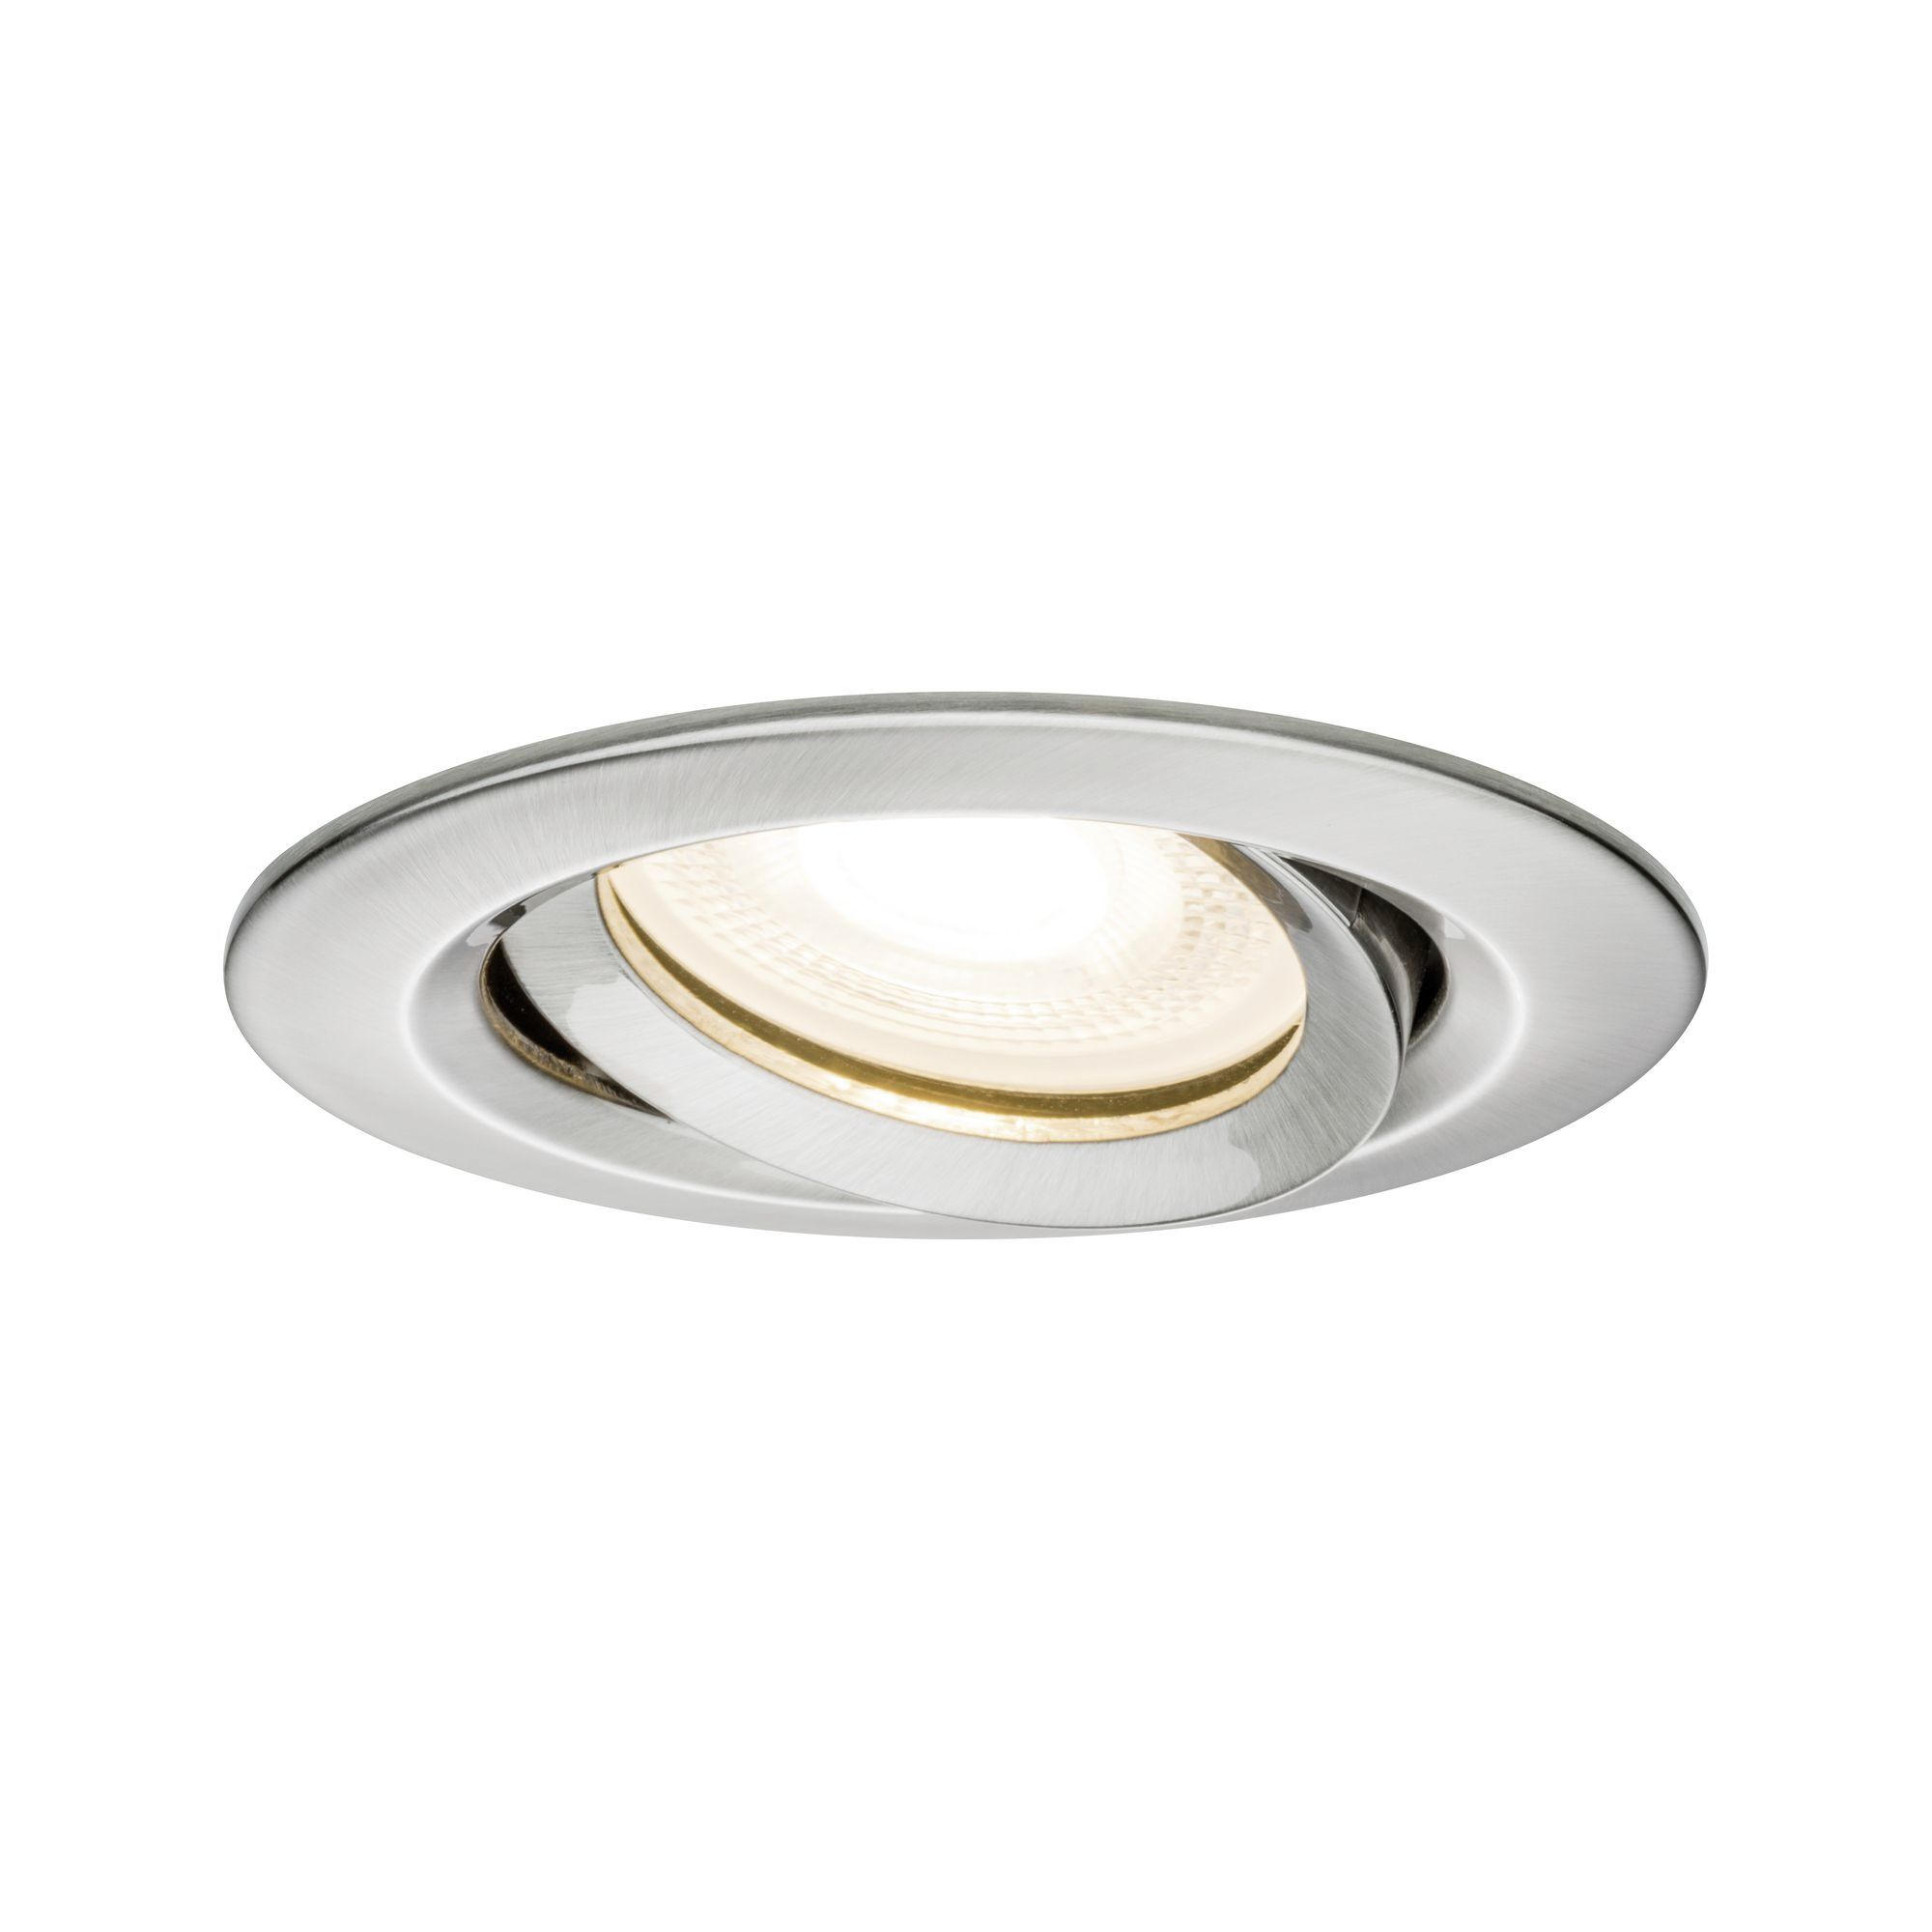 LED-DECKENLEUCHTE 9,3 cm  - Zinkfarben/Alufarben, Basics, Metall (9,3cm) - Paulmann